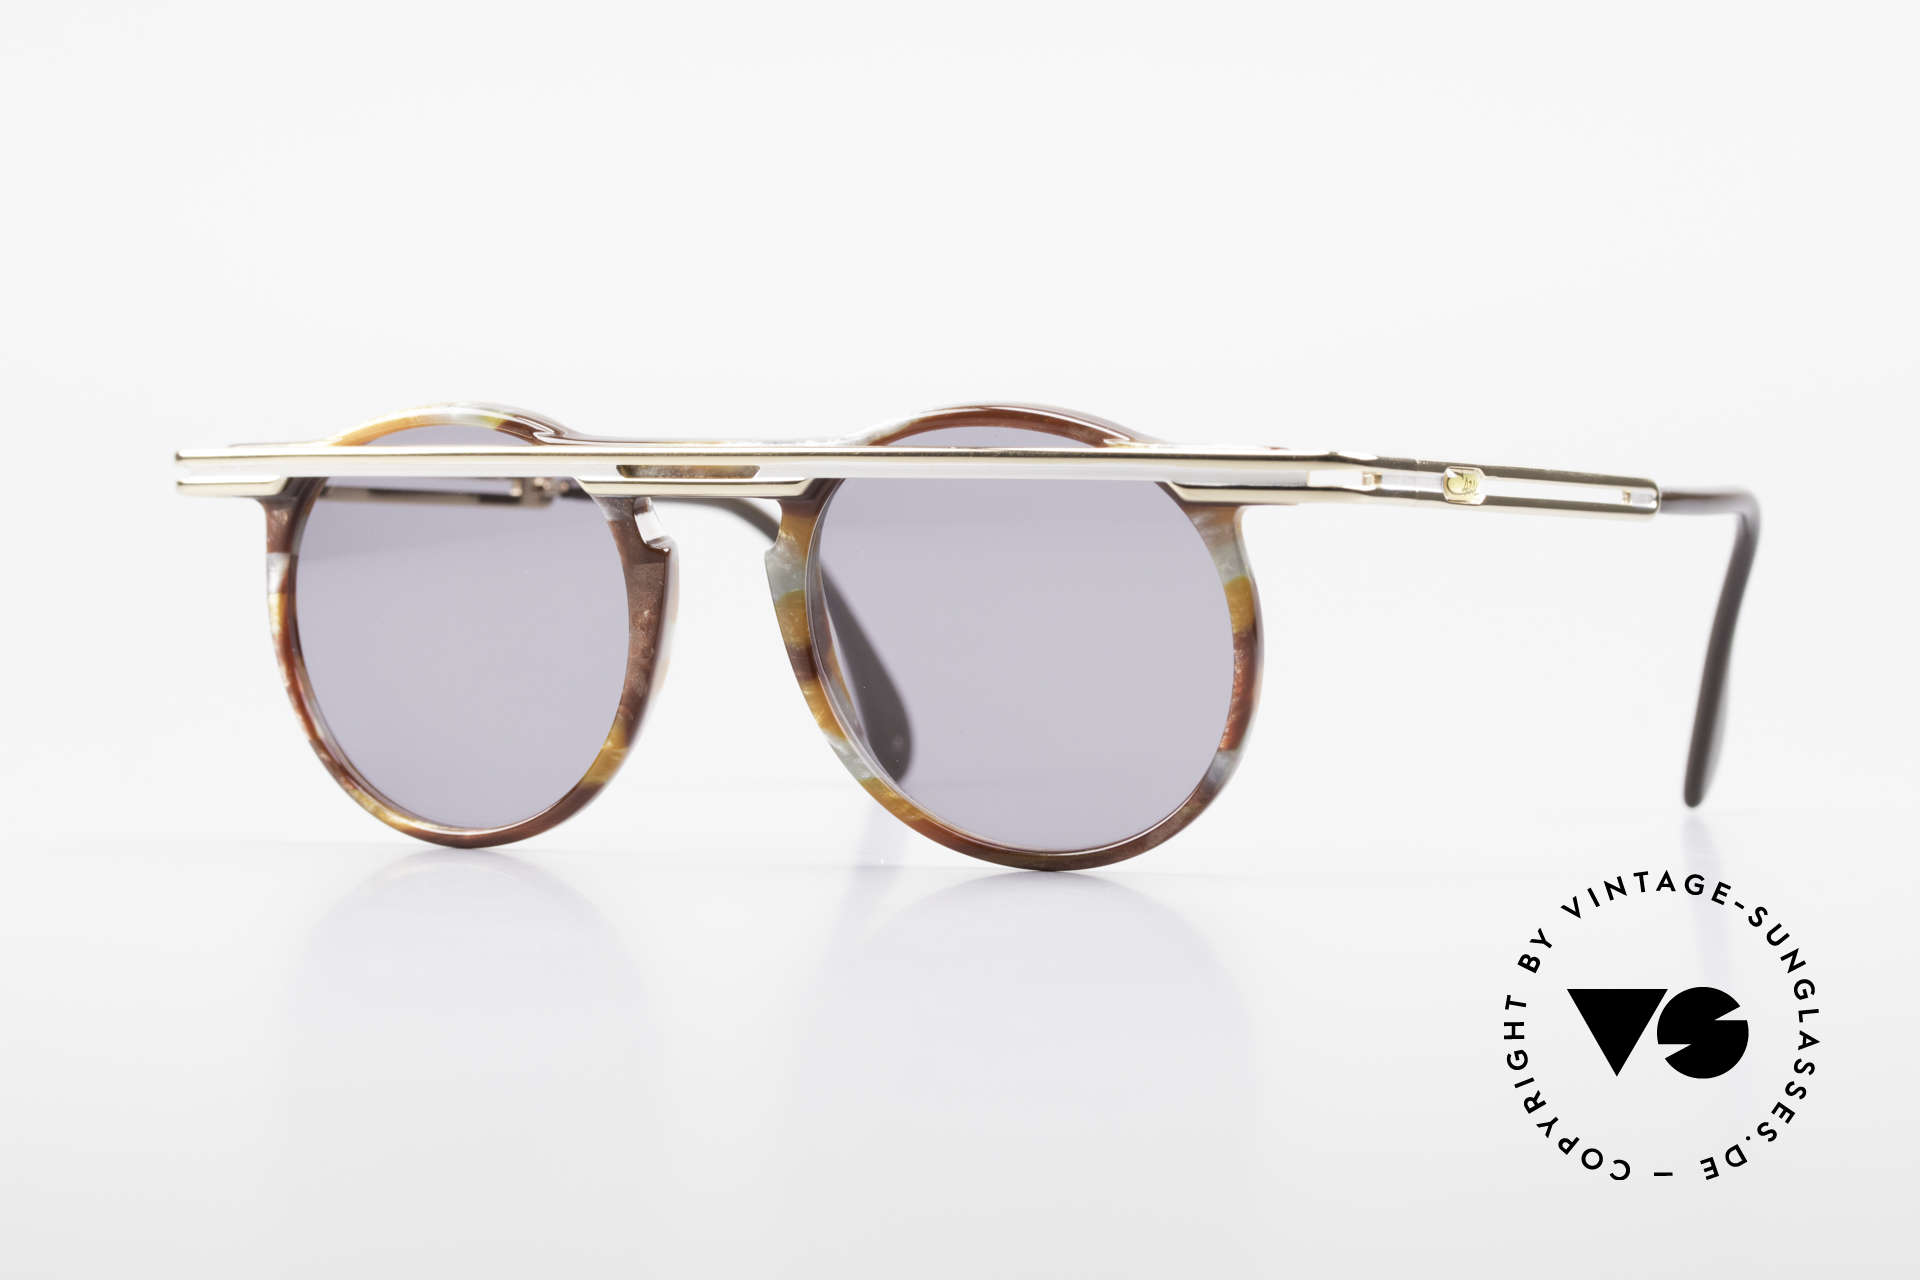 Cazal 648 Cari Zalloni Round Shades 90s, extraordinary CAZAL vintage sunglasses from 1990, Made for Men and Women